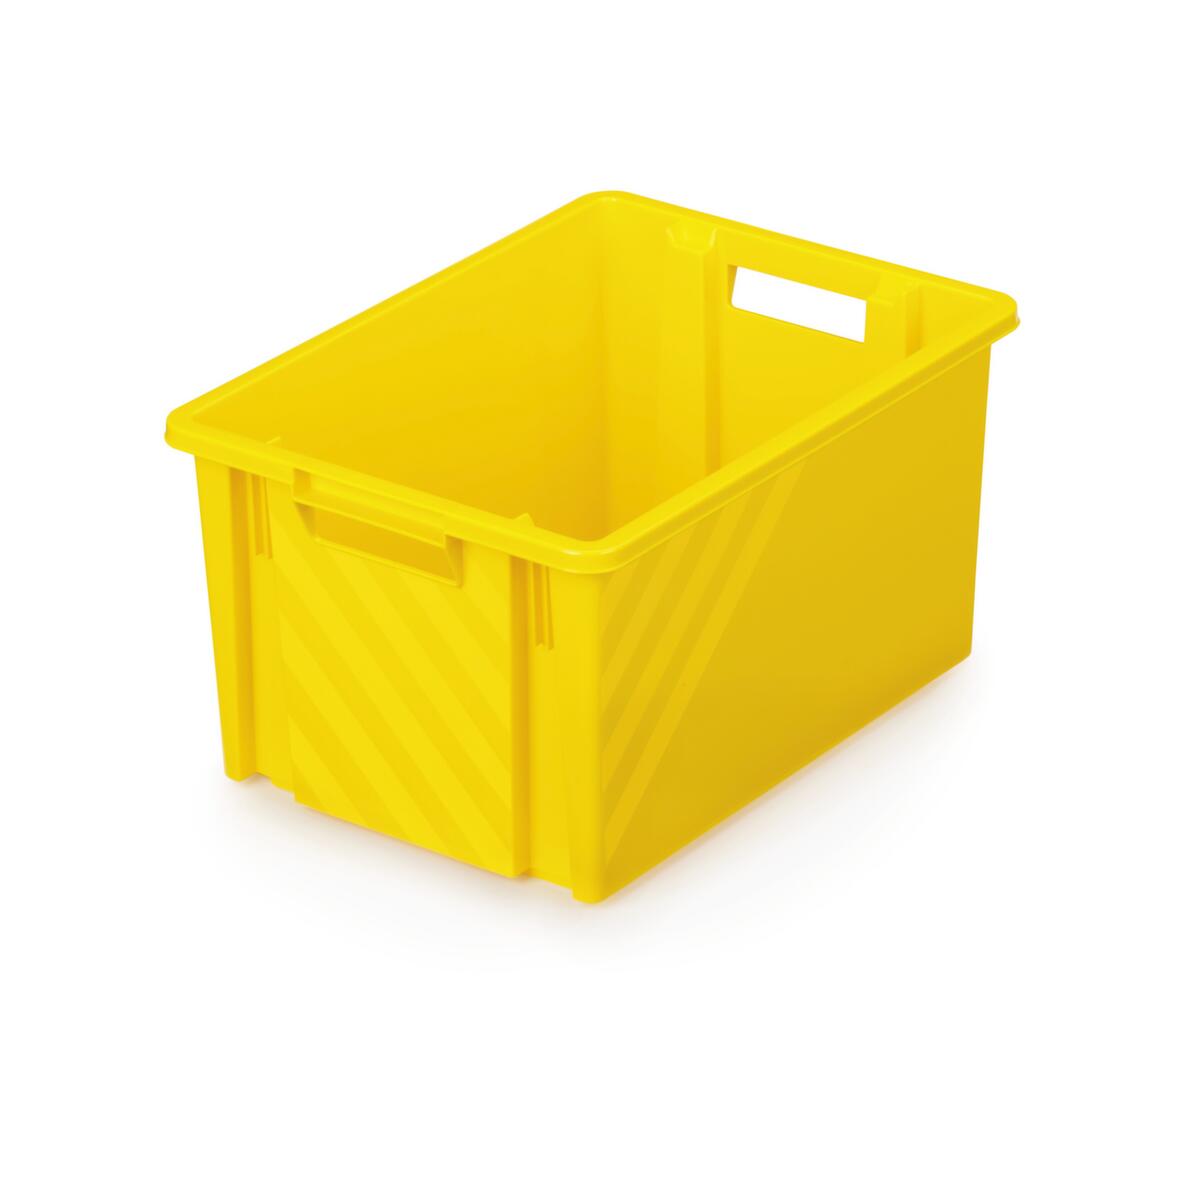 Drehstapelbehälter, gelb, Inhalt 10 l Standard 1 ZOOM